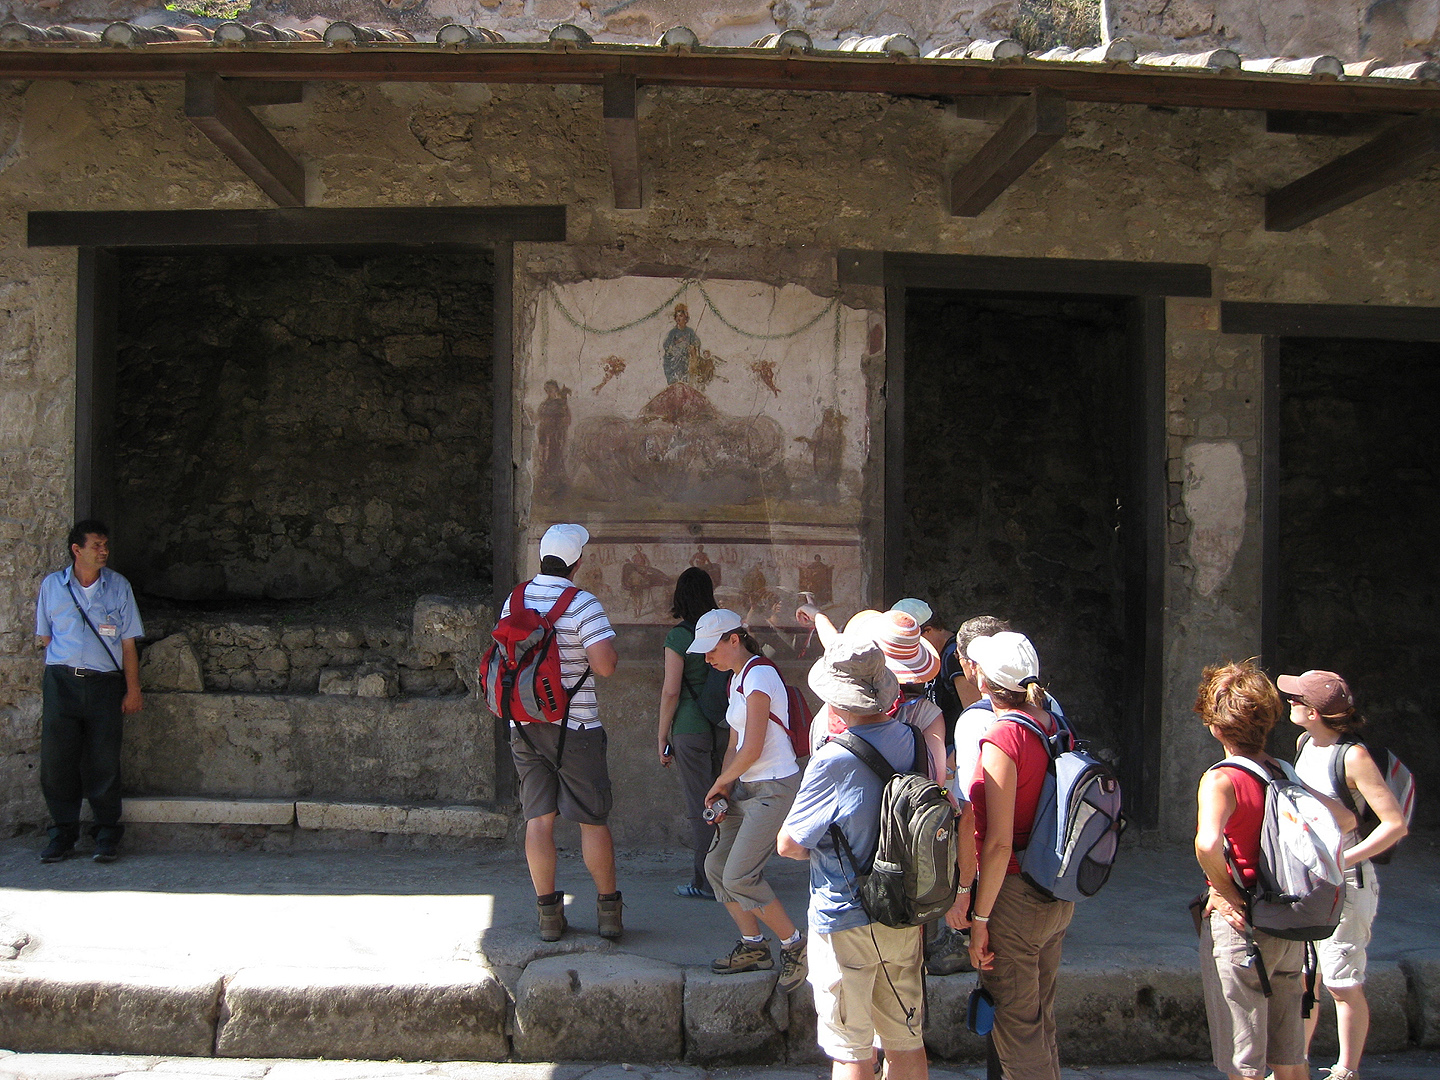 Toeristen in Pompeii, Campani, Itali; Tourists in Pompeii, Campania, Italy